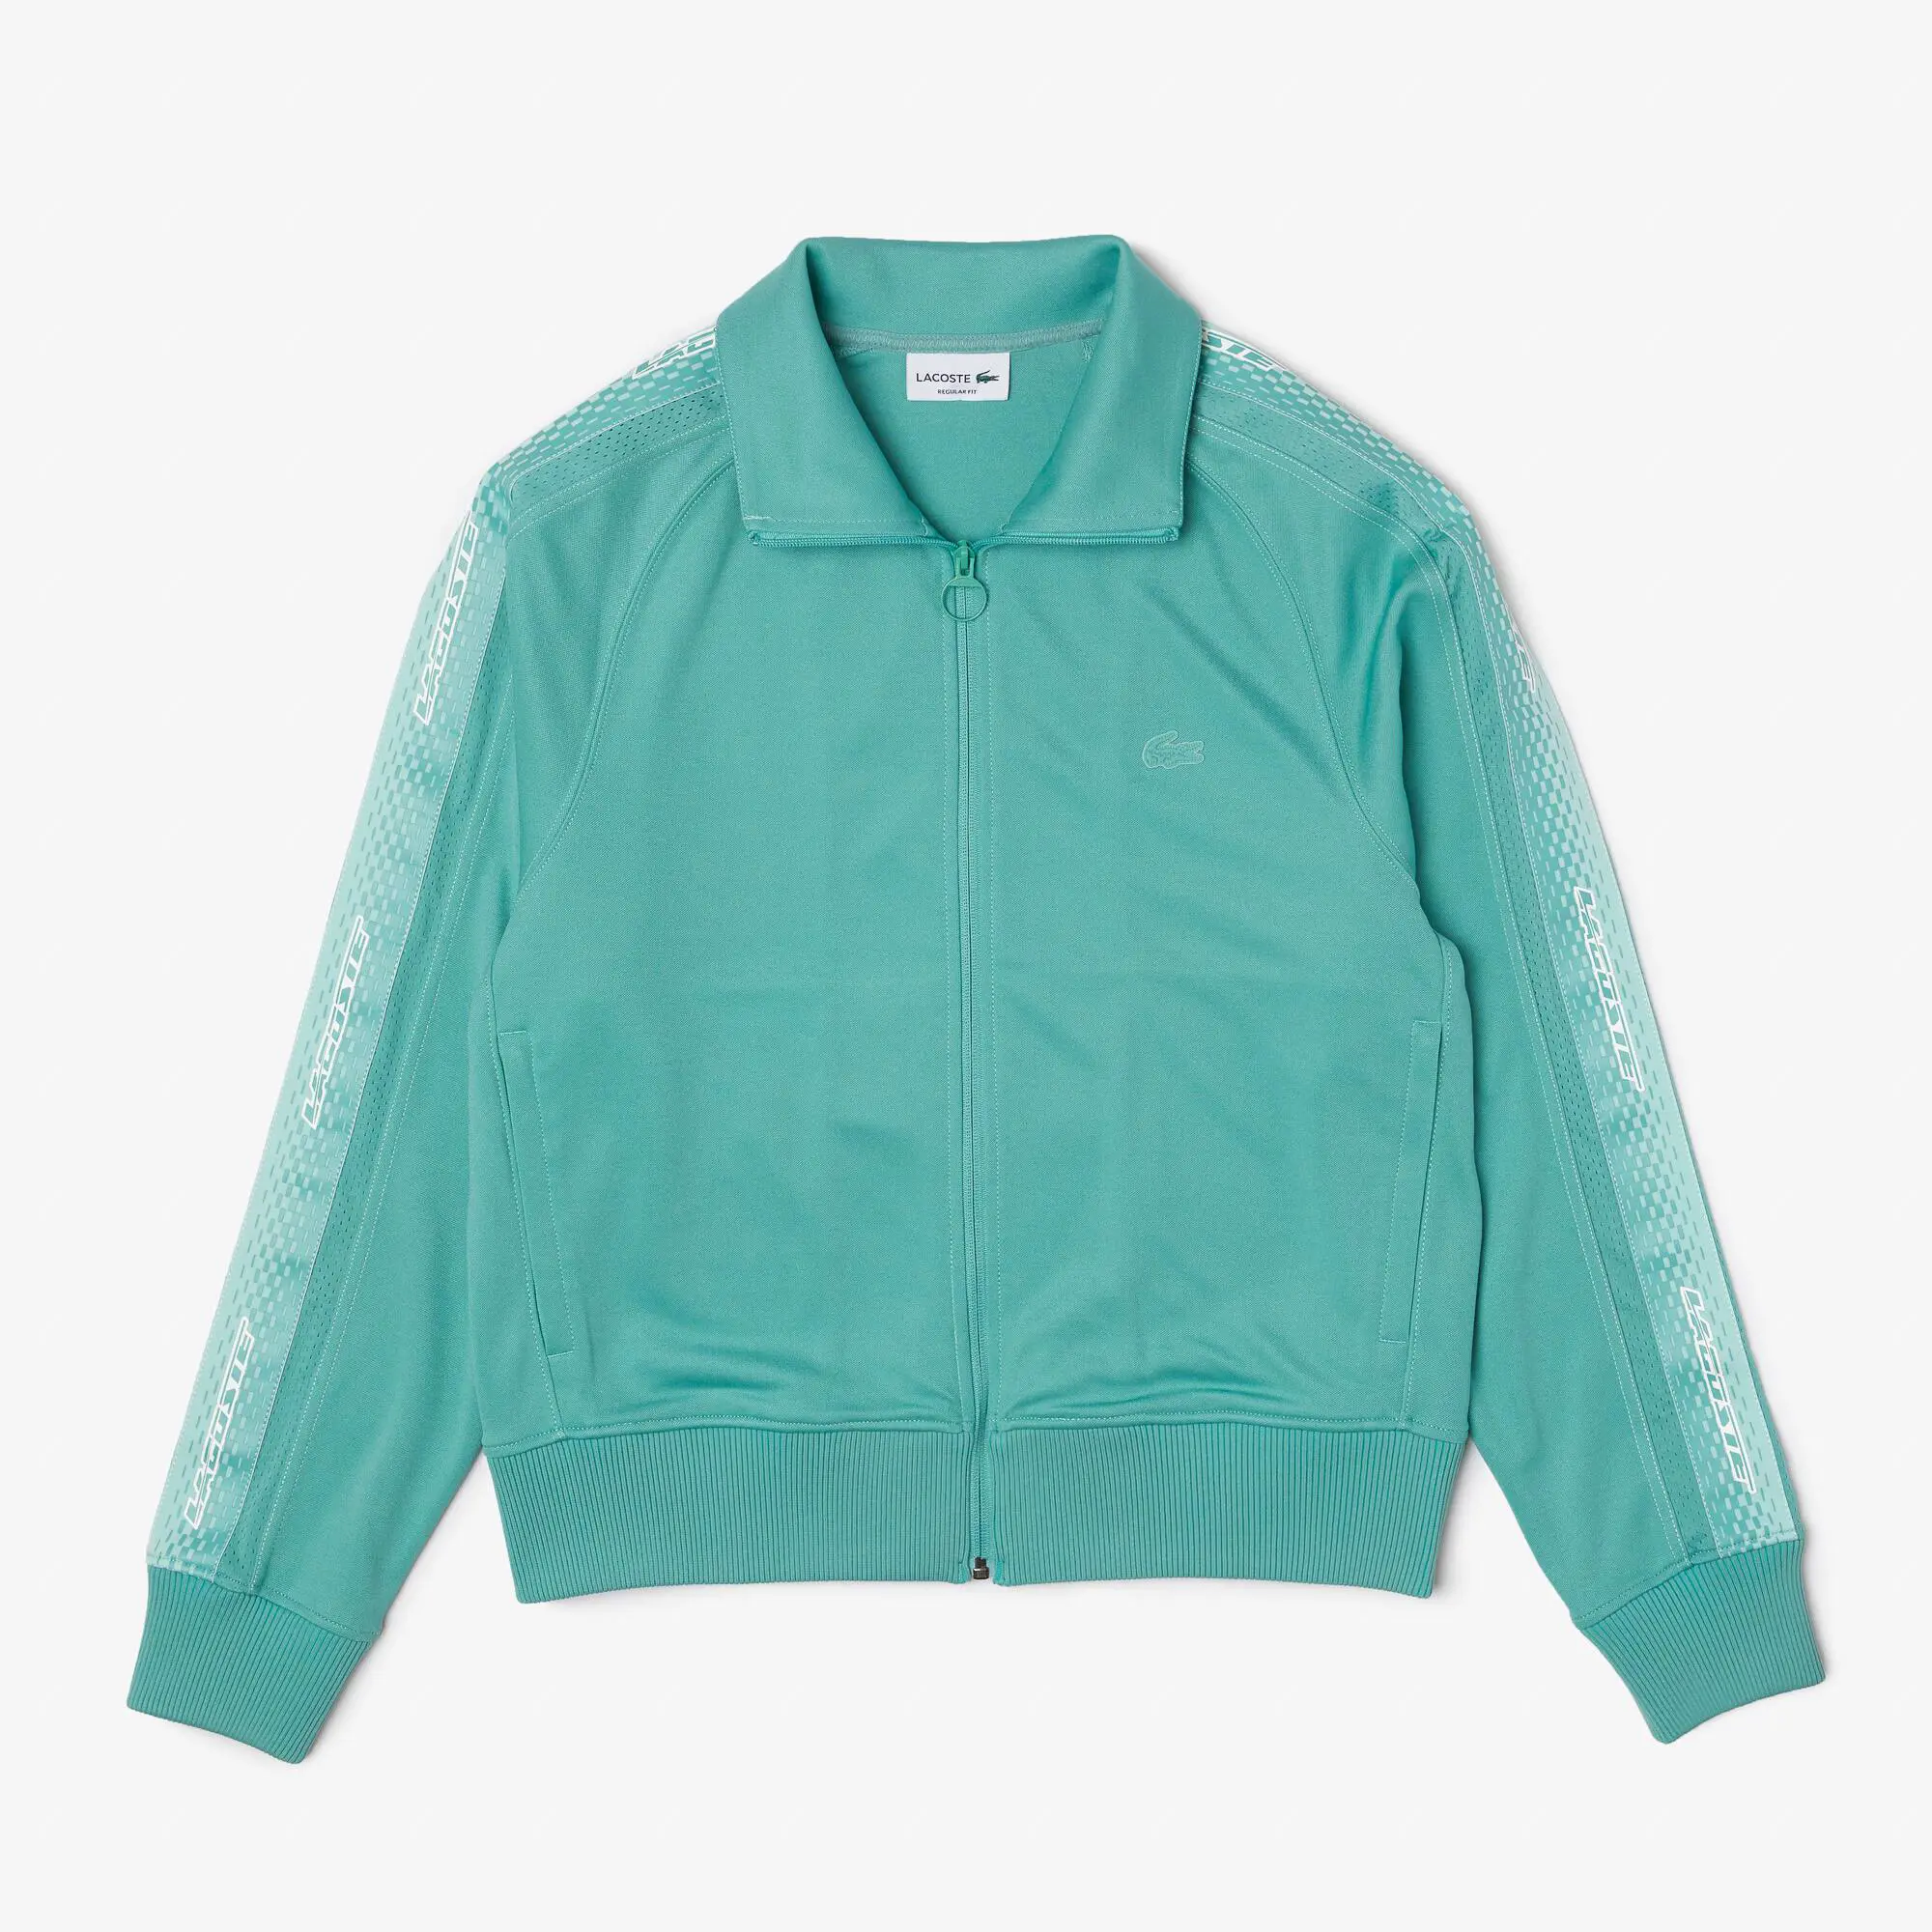 Lacoste Men’s Lacoste Regular Fit Zipped Piqué Sweatshirt. 2